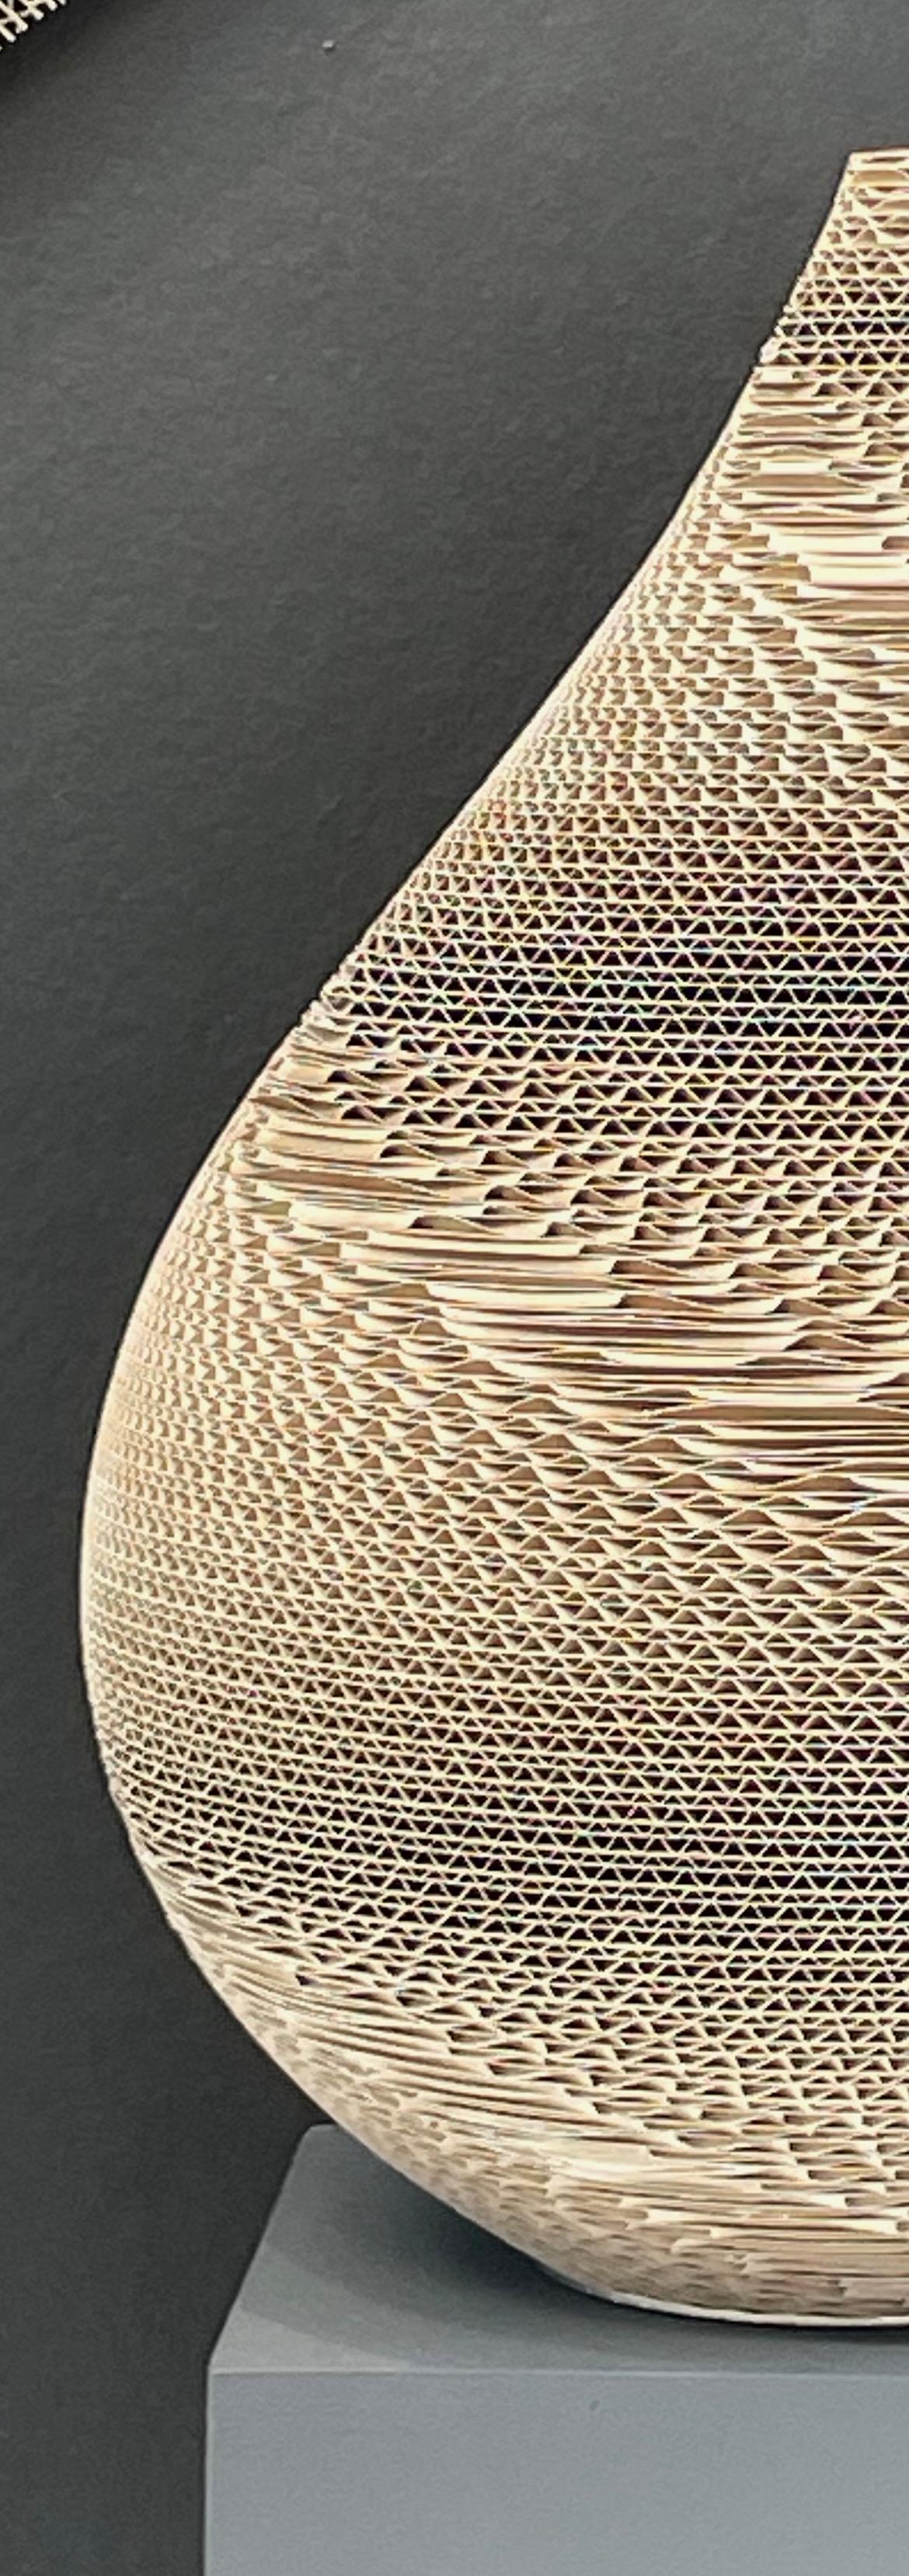 Corrugated Paper Vase Sculpture, France, Contemporary 2